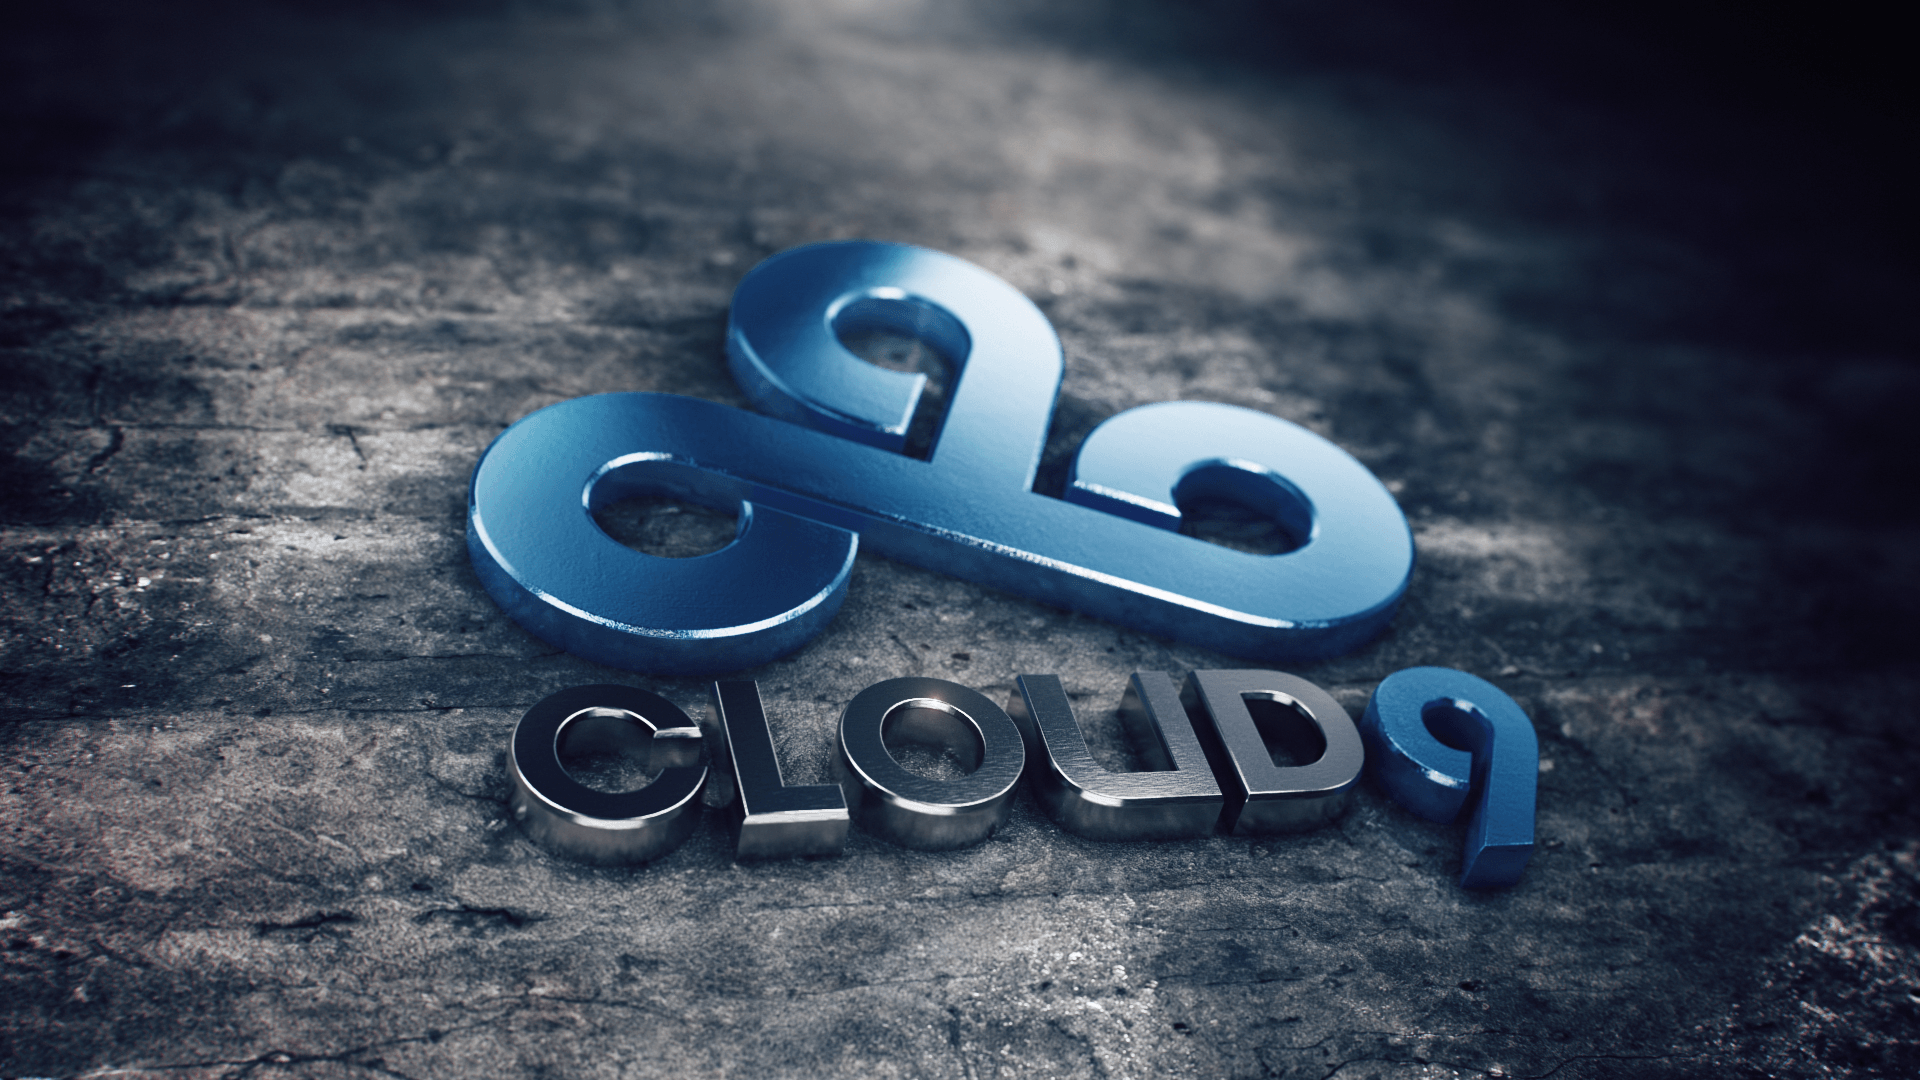 Cloud 9 Logo - Cloud9 logo 3d | CS:GO Wallpapers and Backgrounds